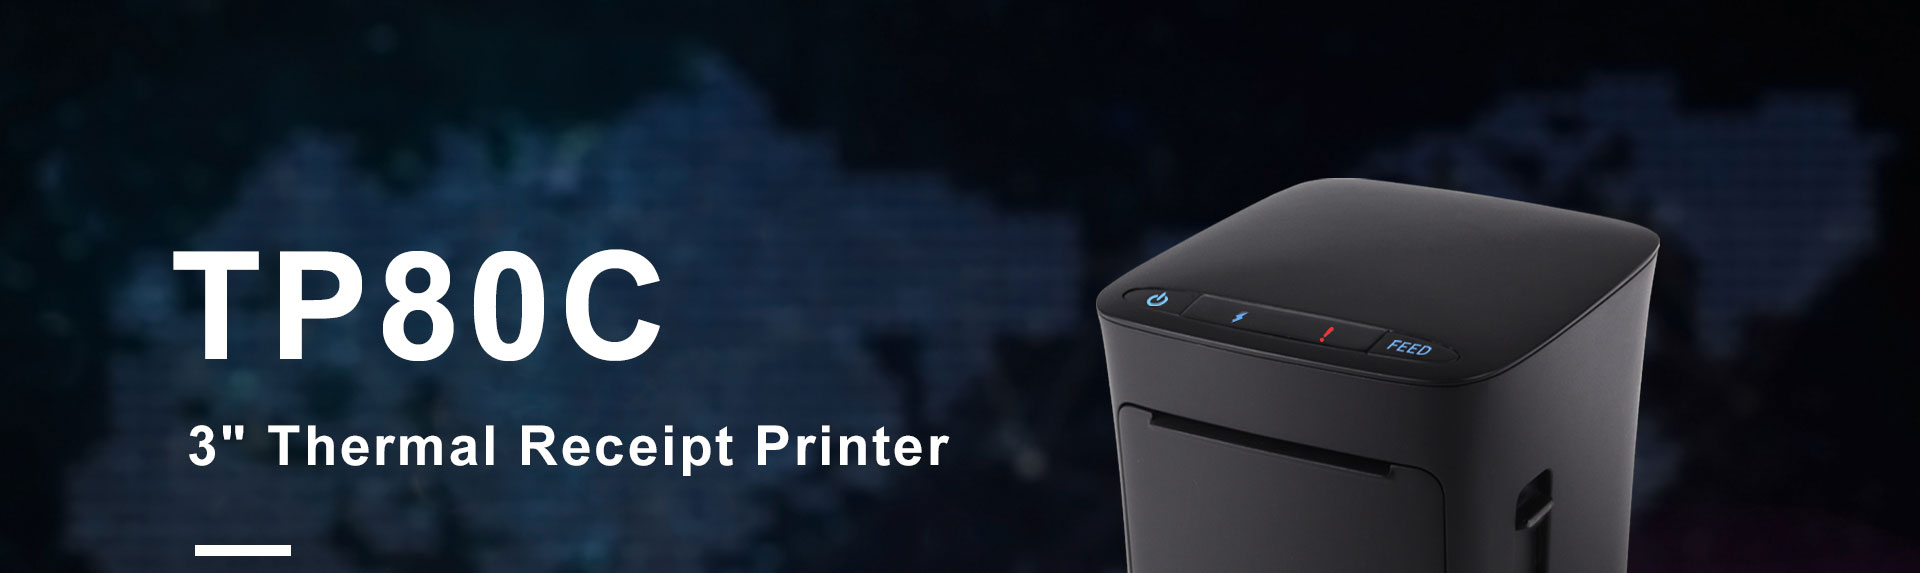 HPRT 3 inch label printer TP80C